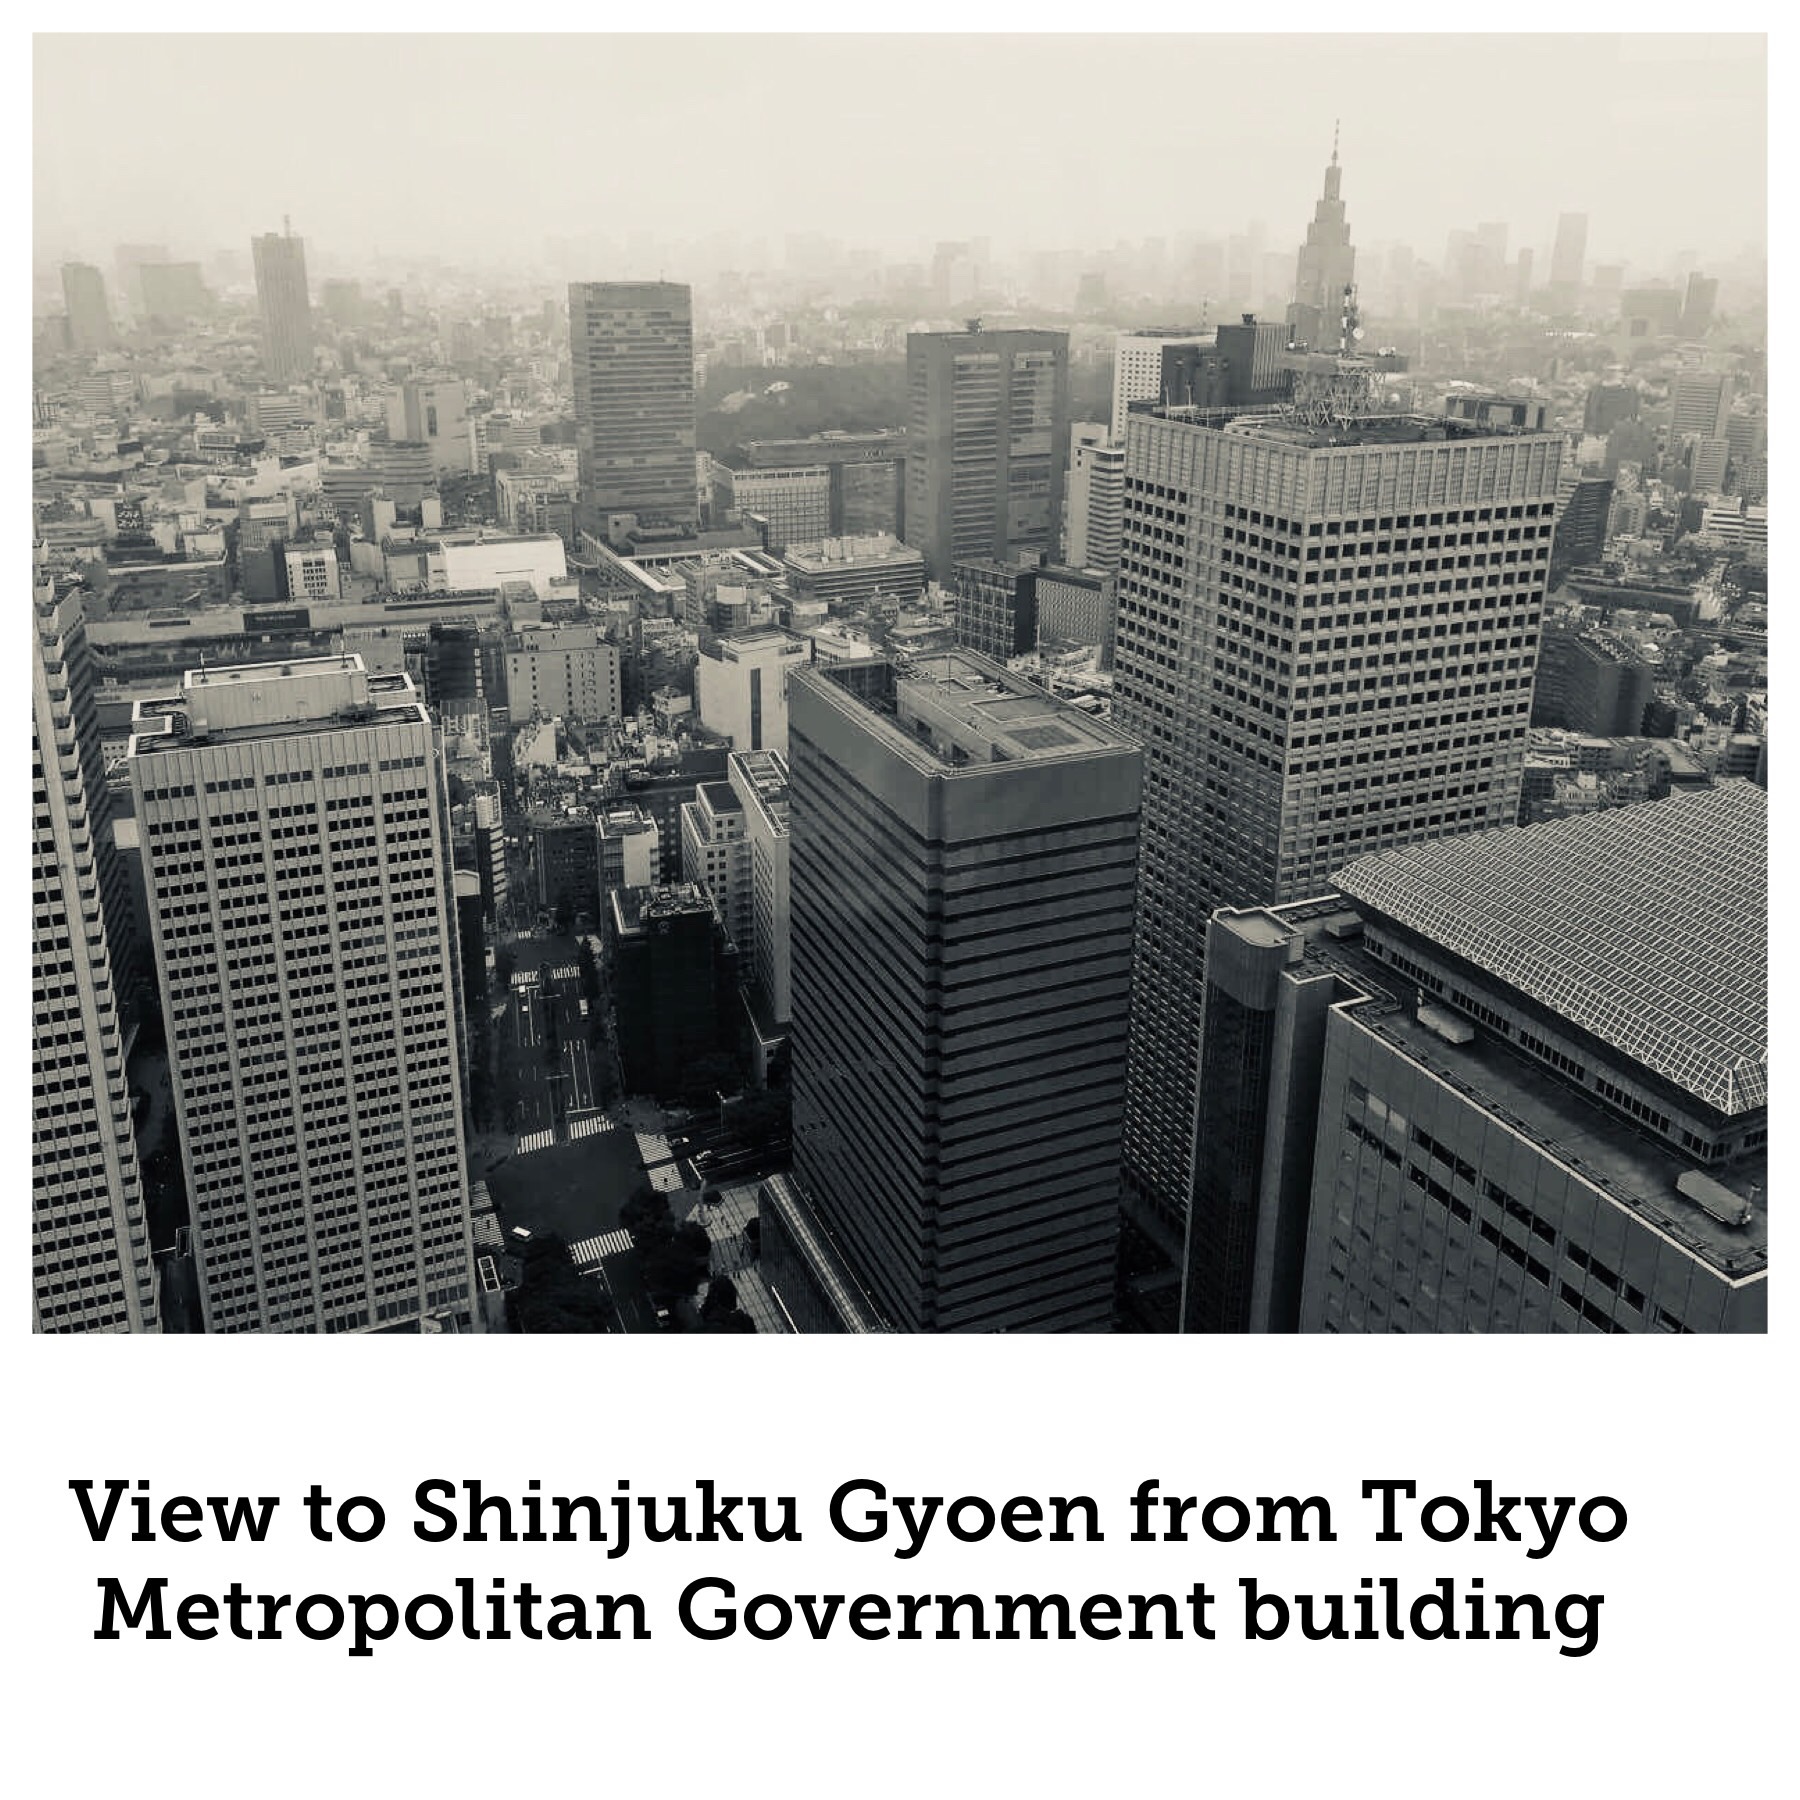 View to Shinjuku Gyoen from Tokyo Metropolitan Government building